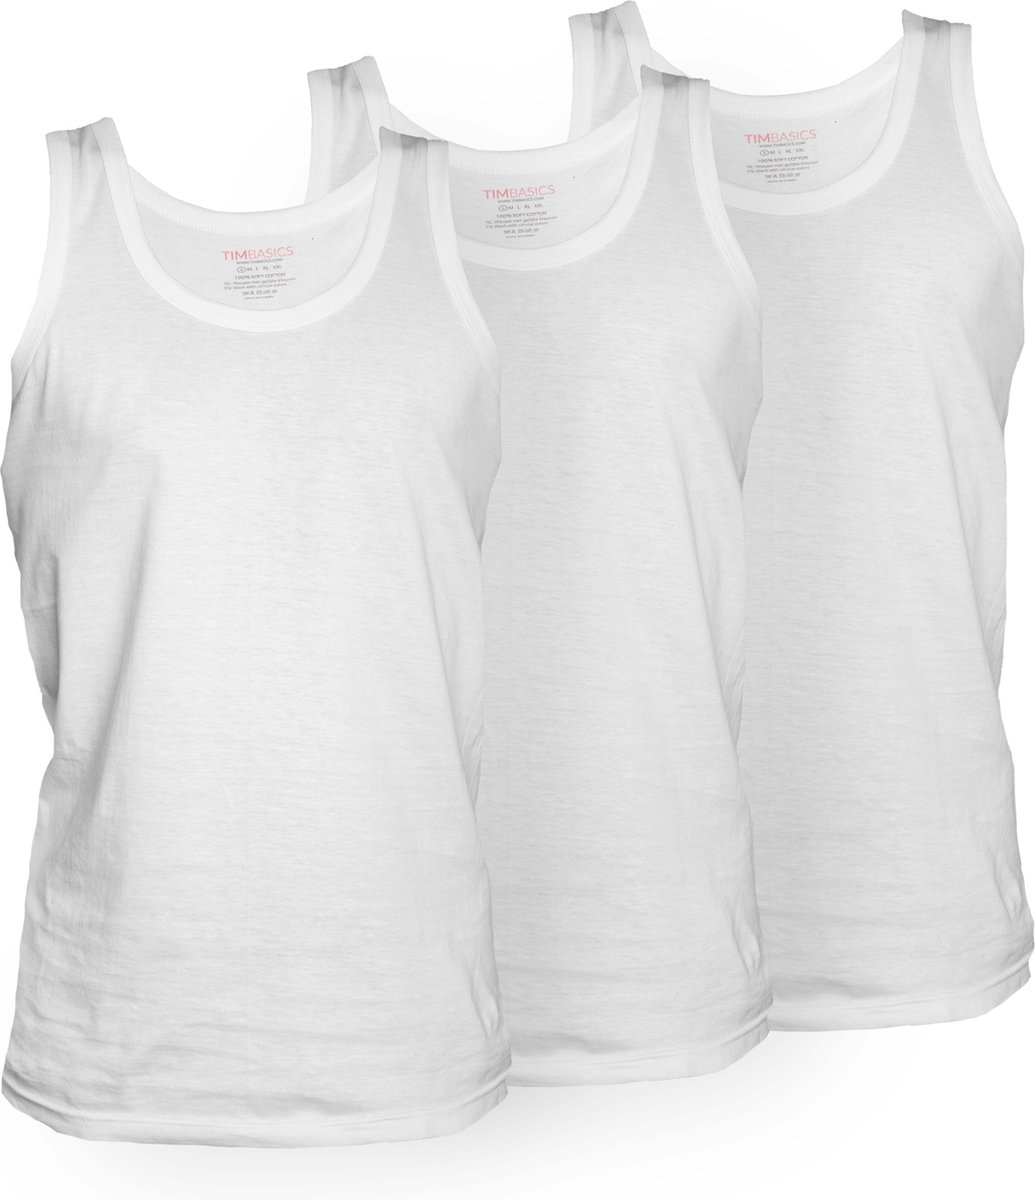 TimBasics - 100% Katoen - Heren Onderhemd - 3-Pack - Wit - L - Tanktop heren - Onderhemden heren